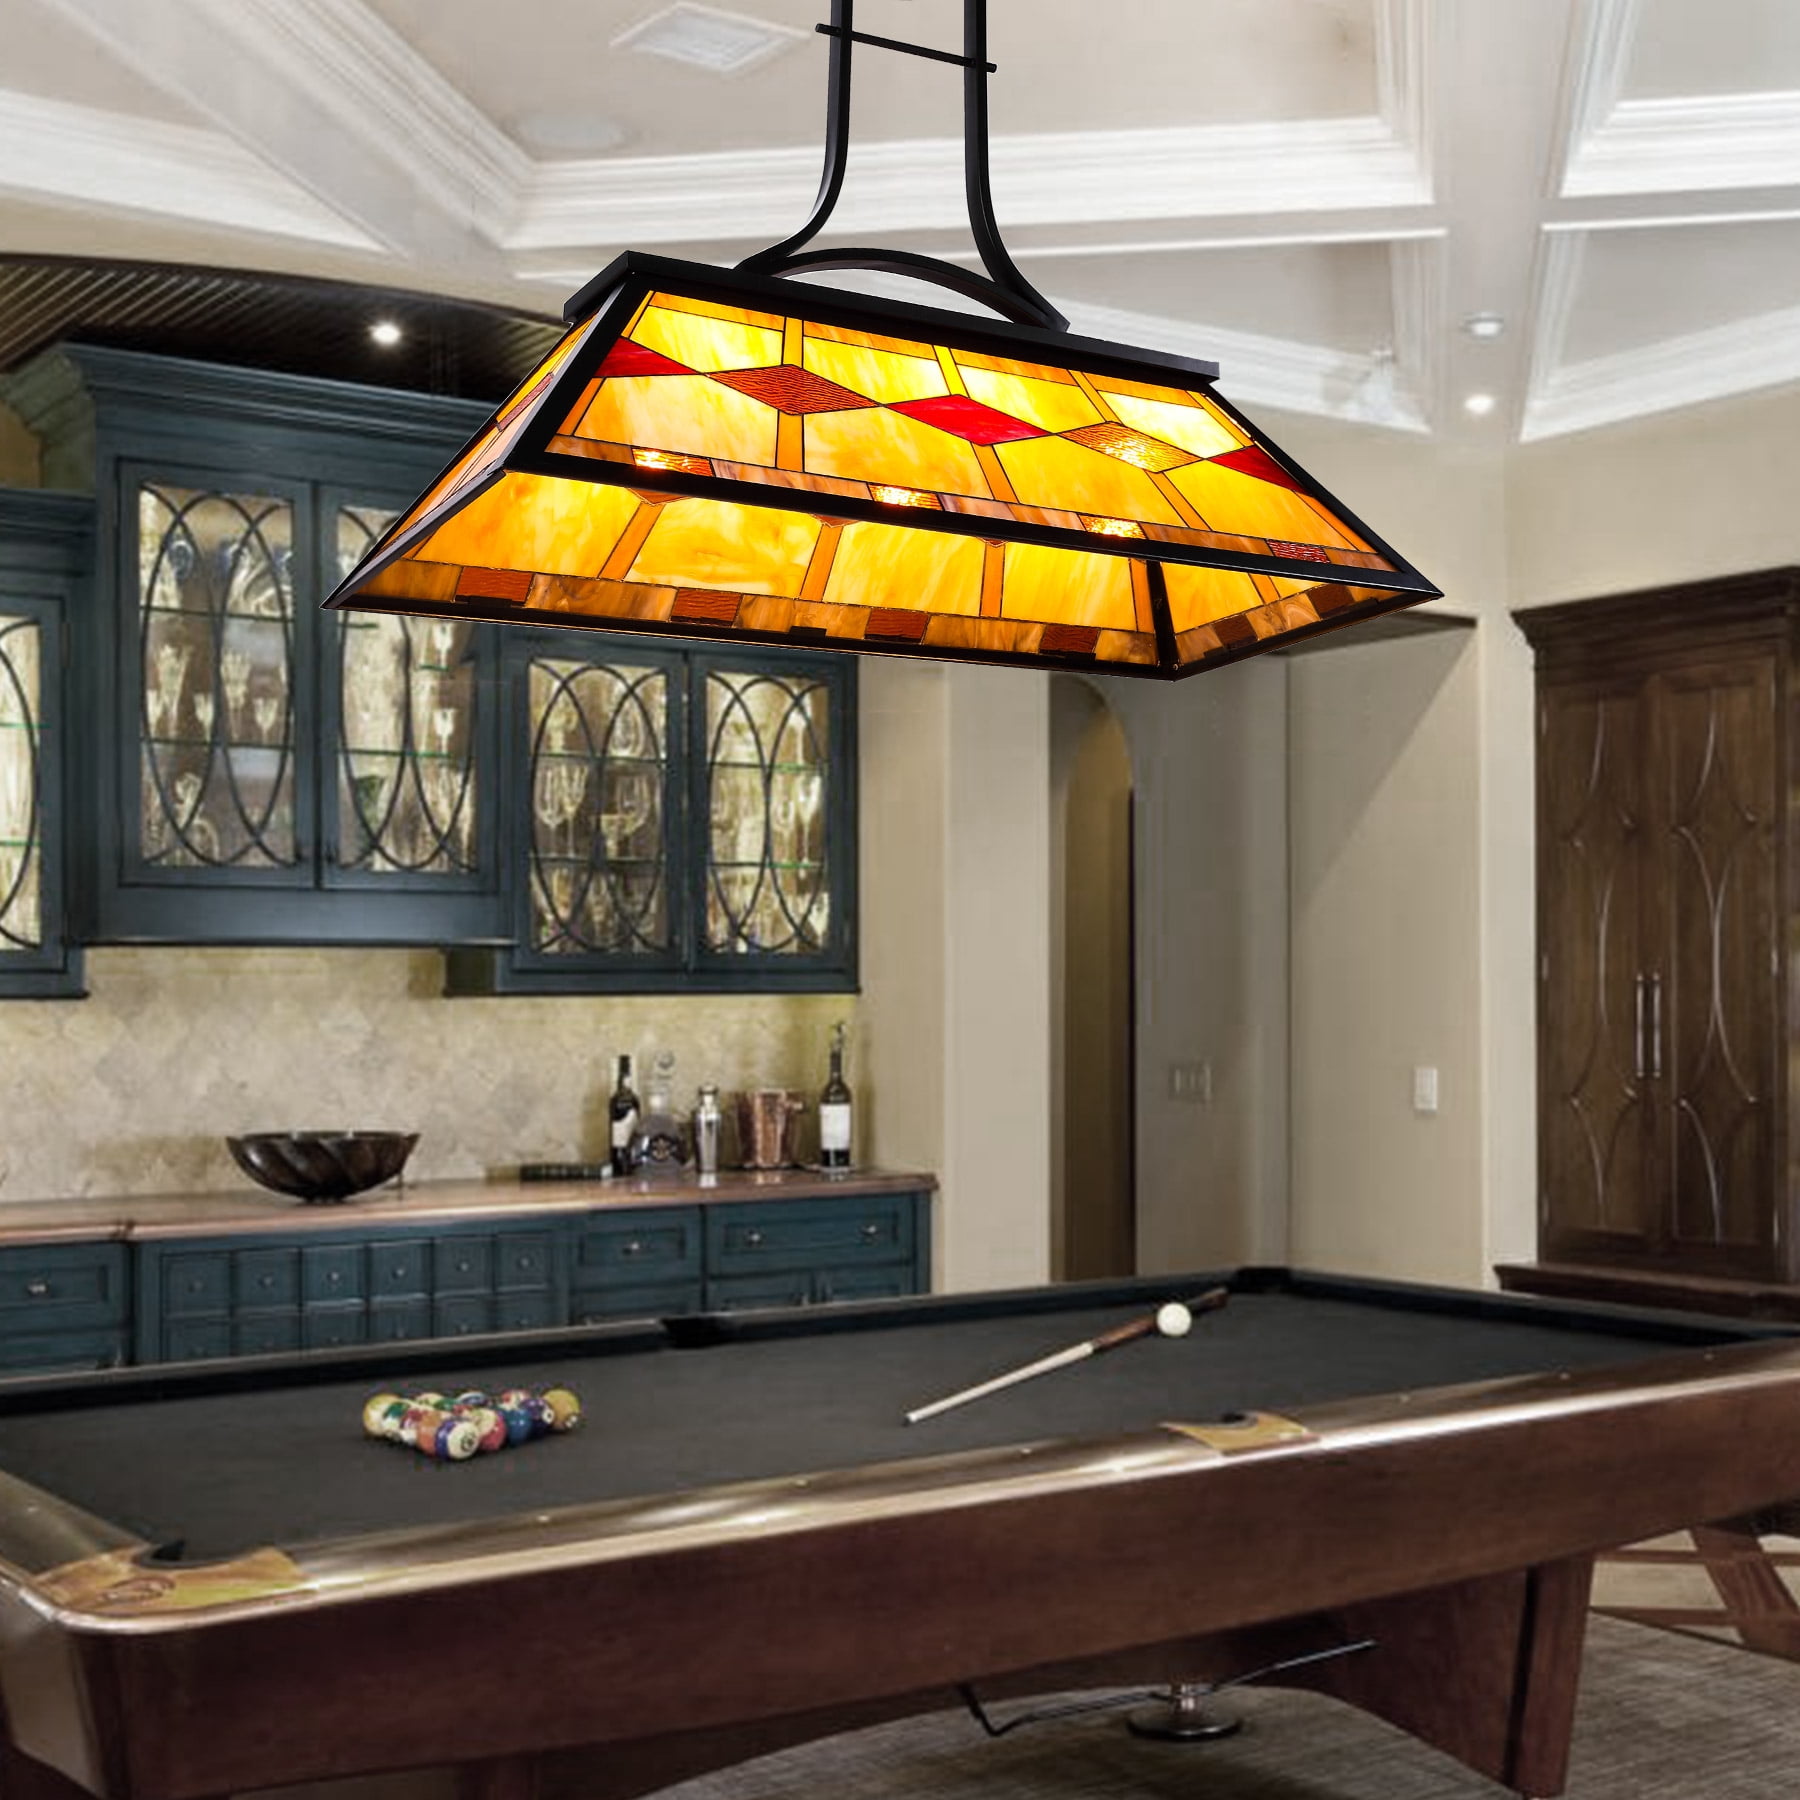 43" Hanging Billiard light Fixture Bar Pool Table Light Retro Style Black Metal 